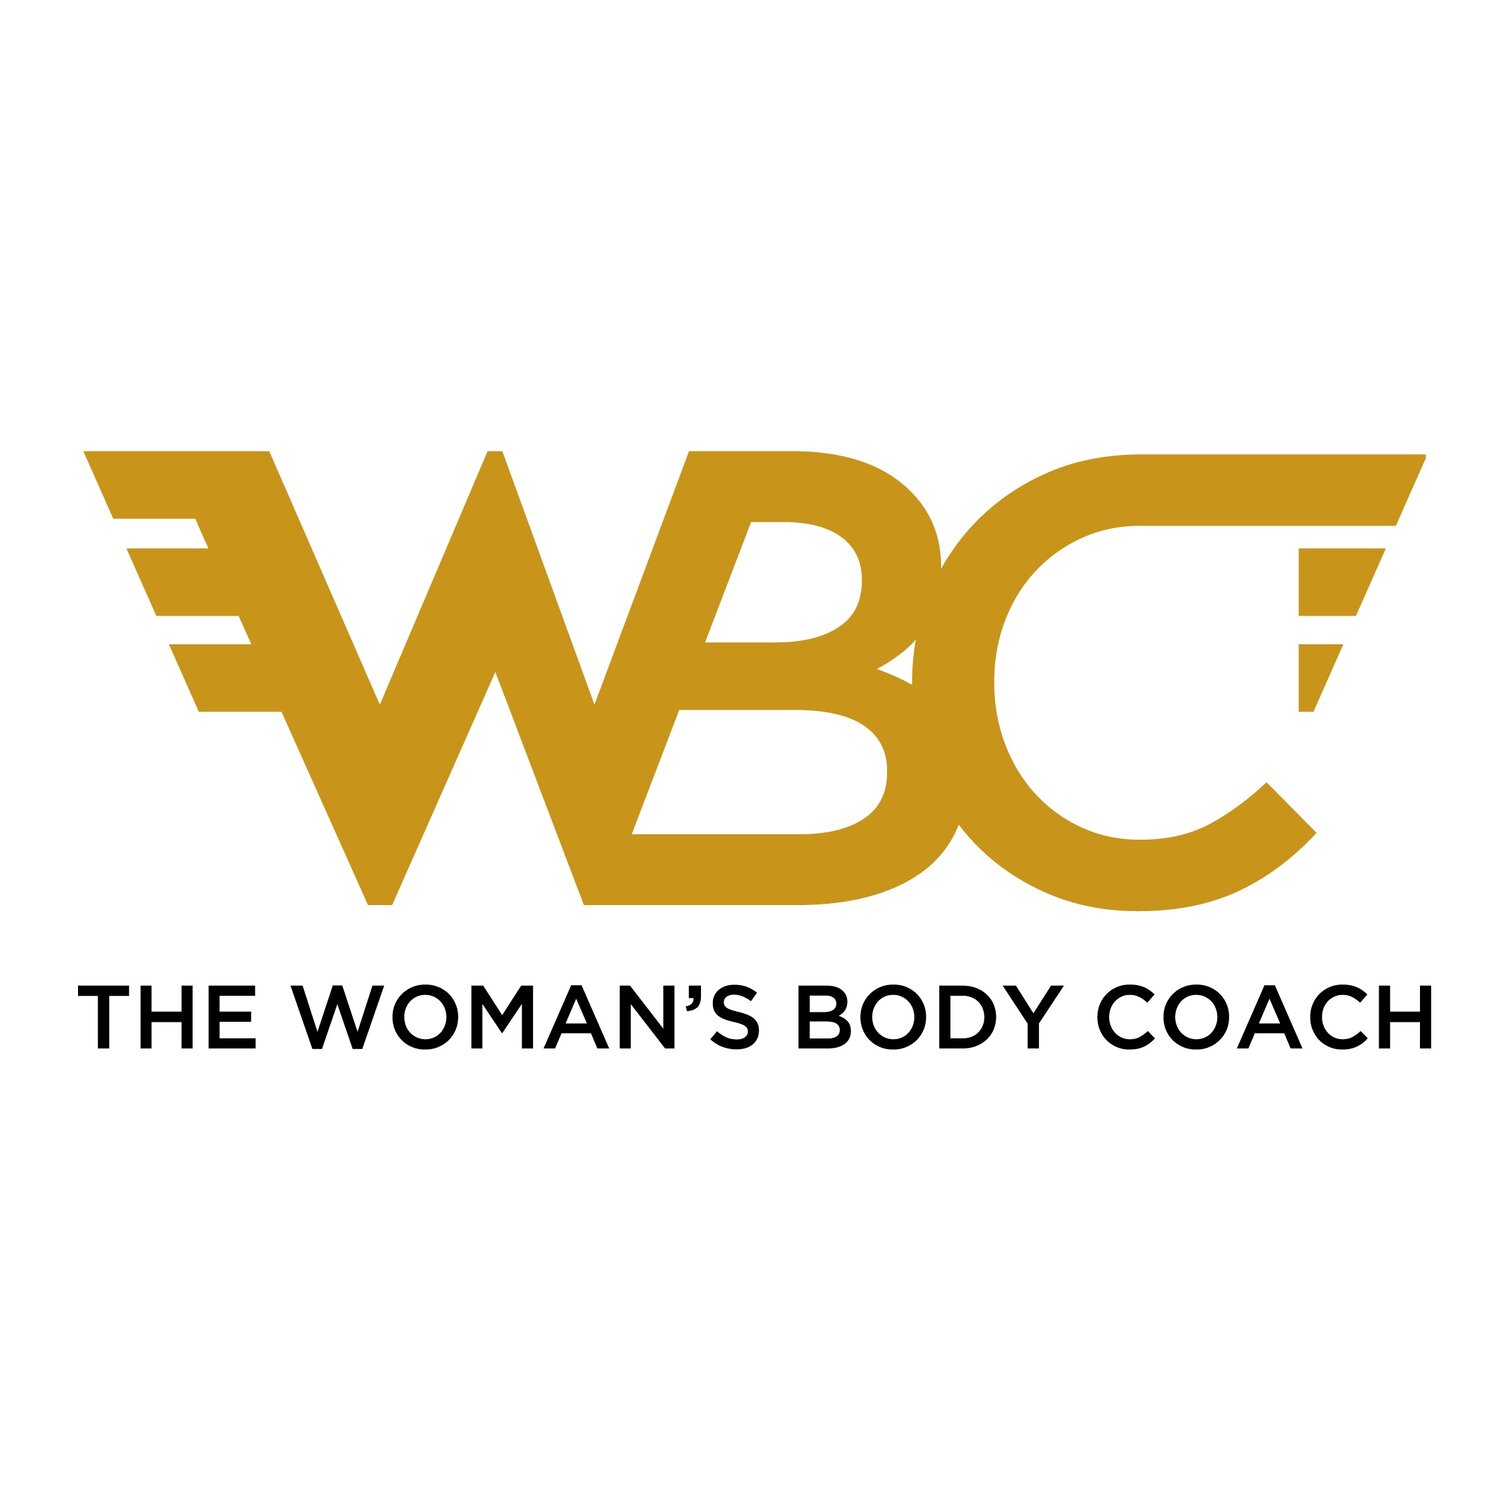 The Woman's Body Coach